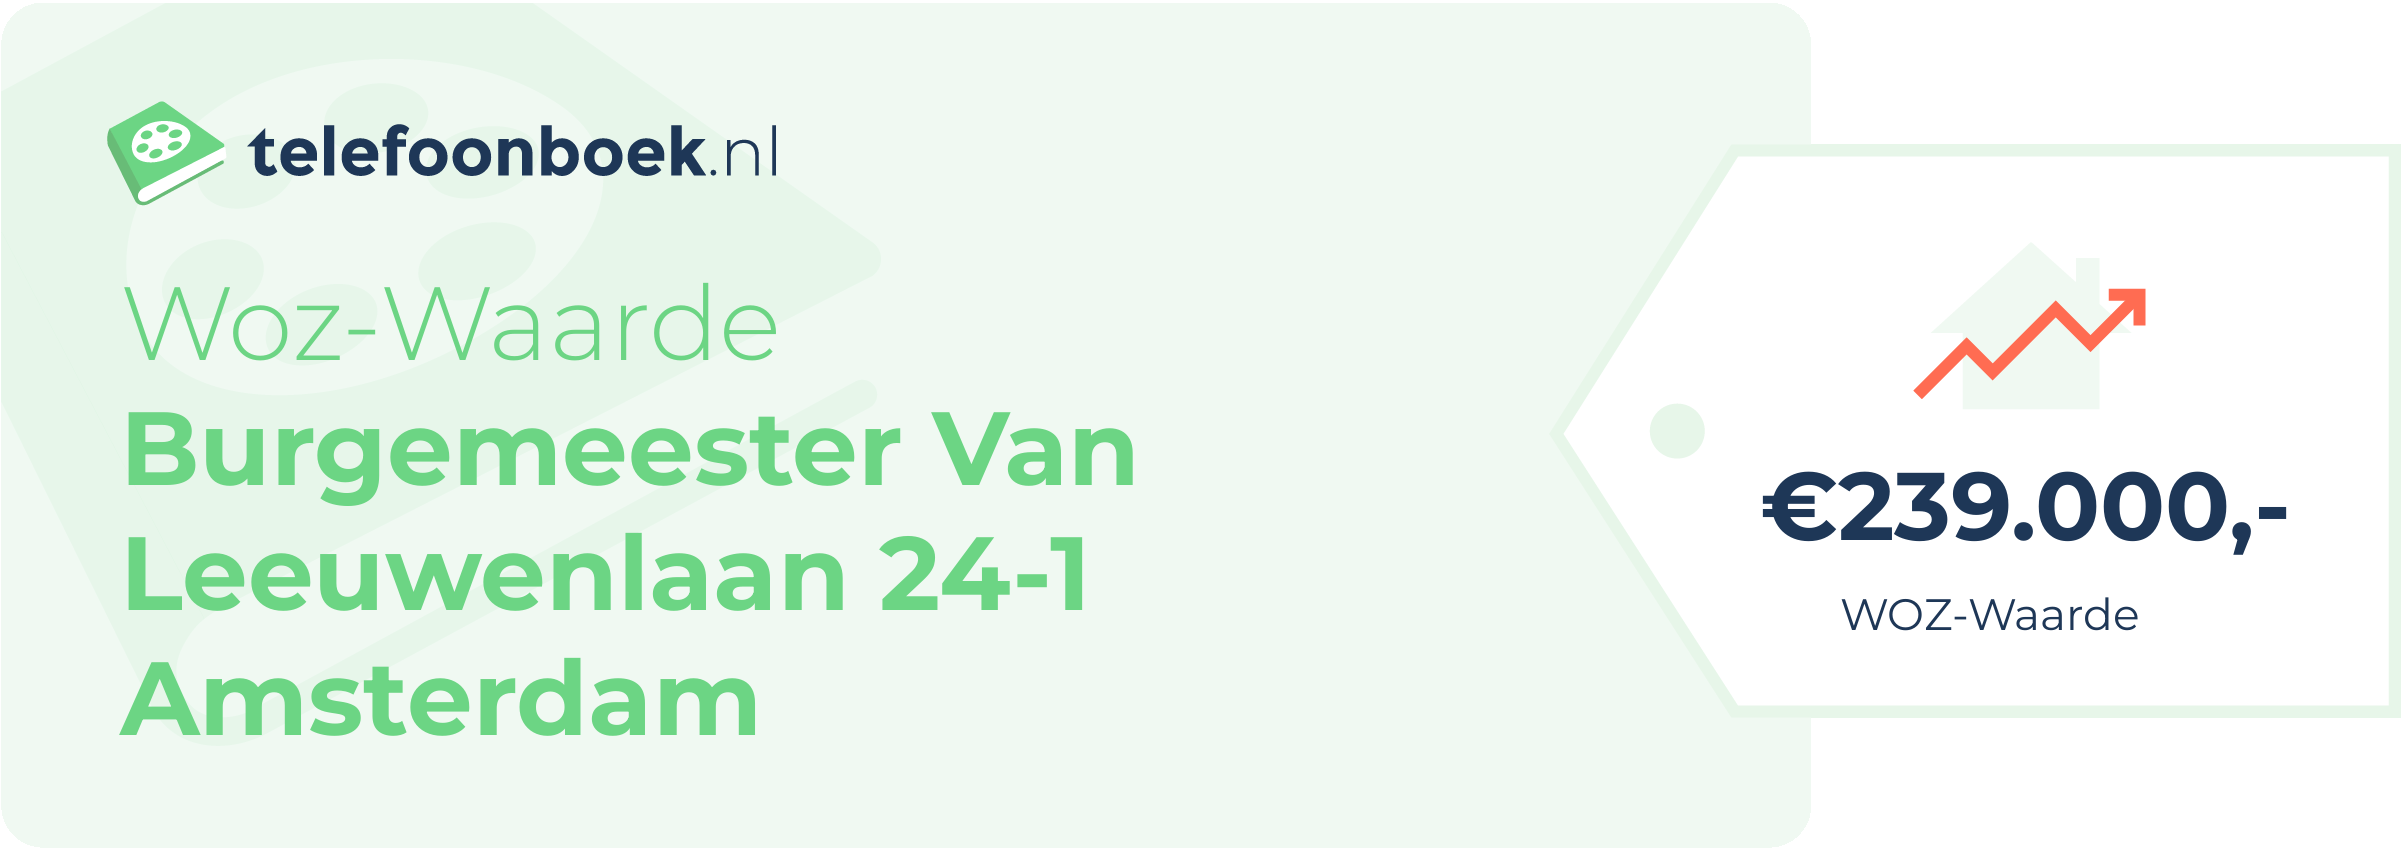 WOZ-waarde Burgemeester Van Leeuwenlaan 24-1 Amsterdam